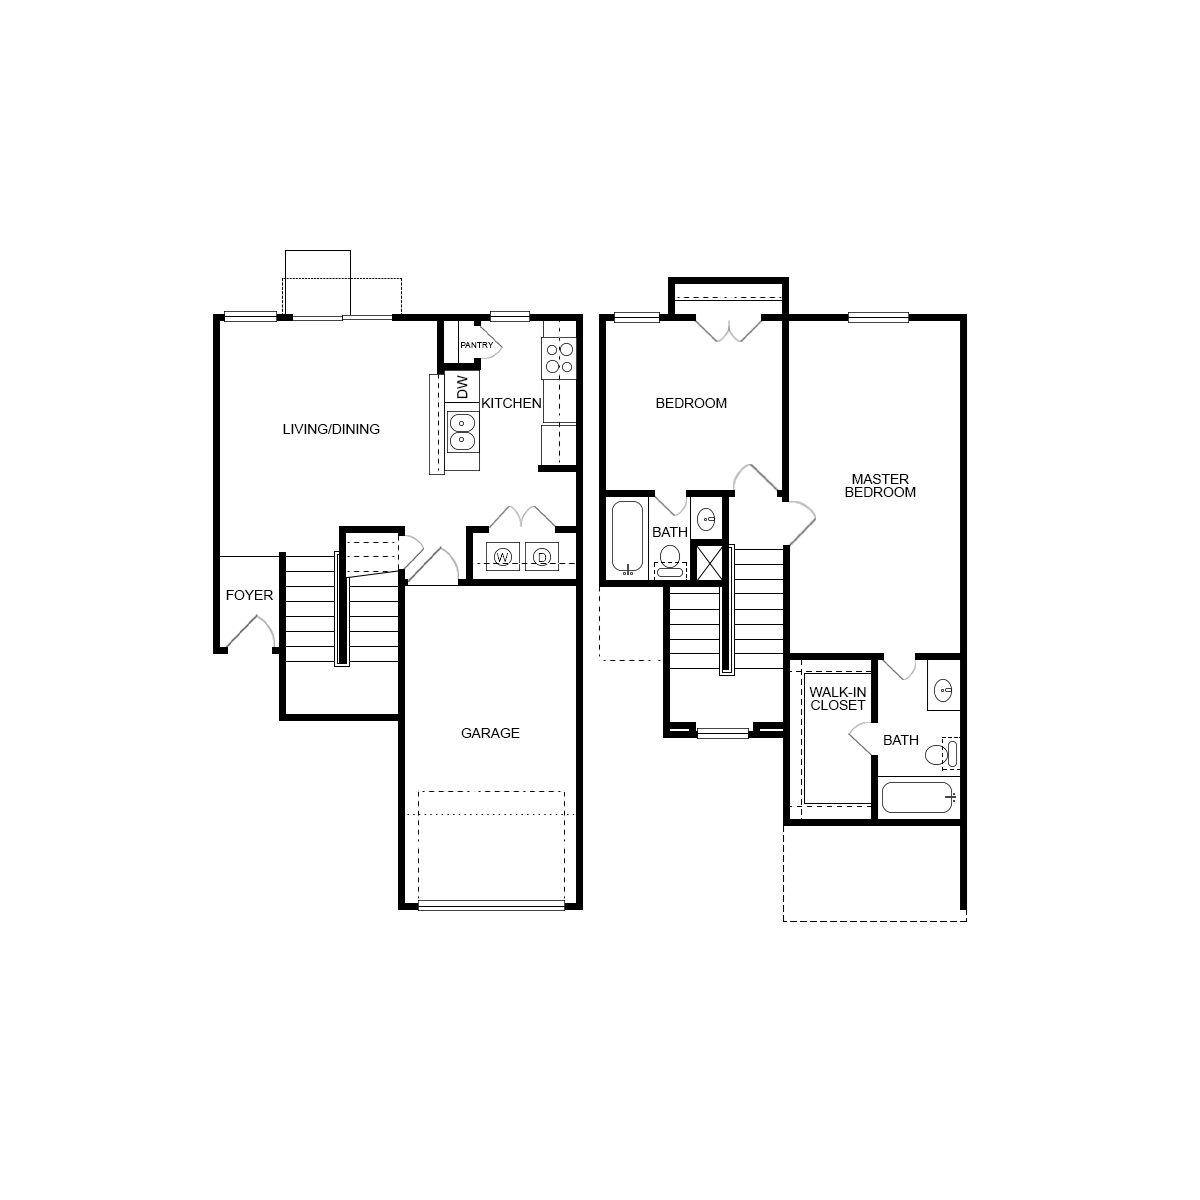 Floor Plans of Homes of Persimmon in Dallas, TX